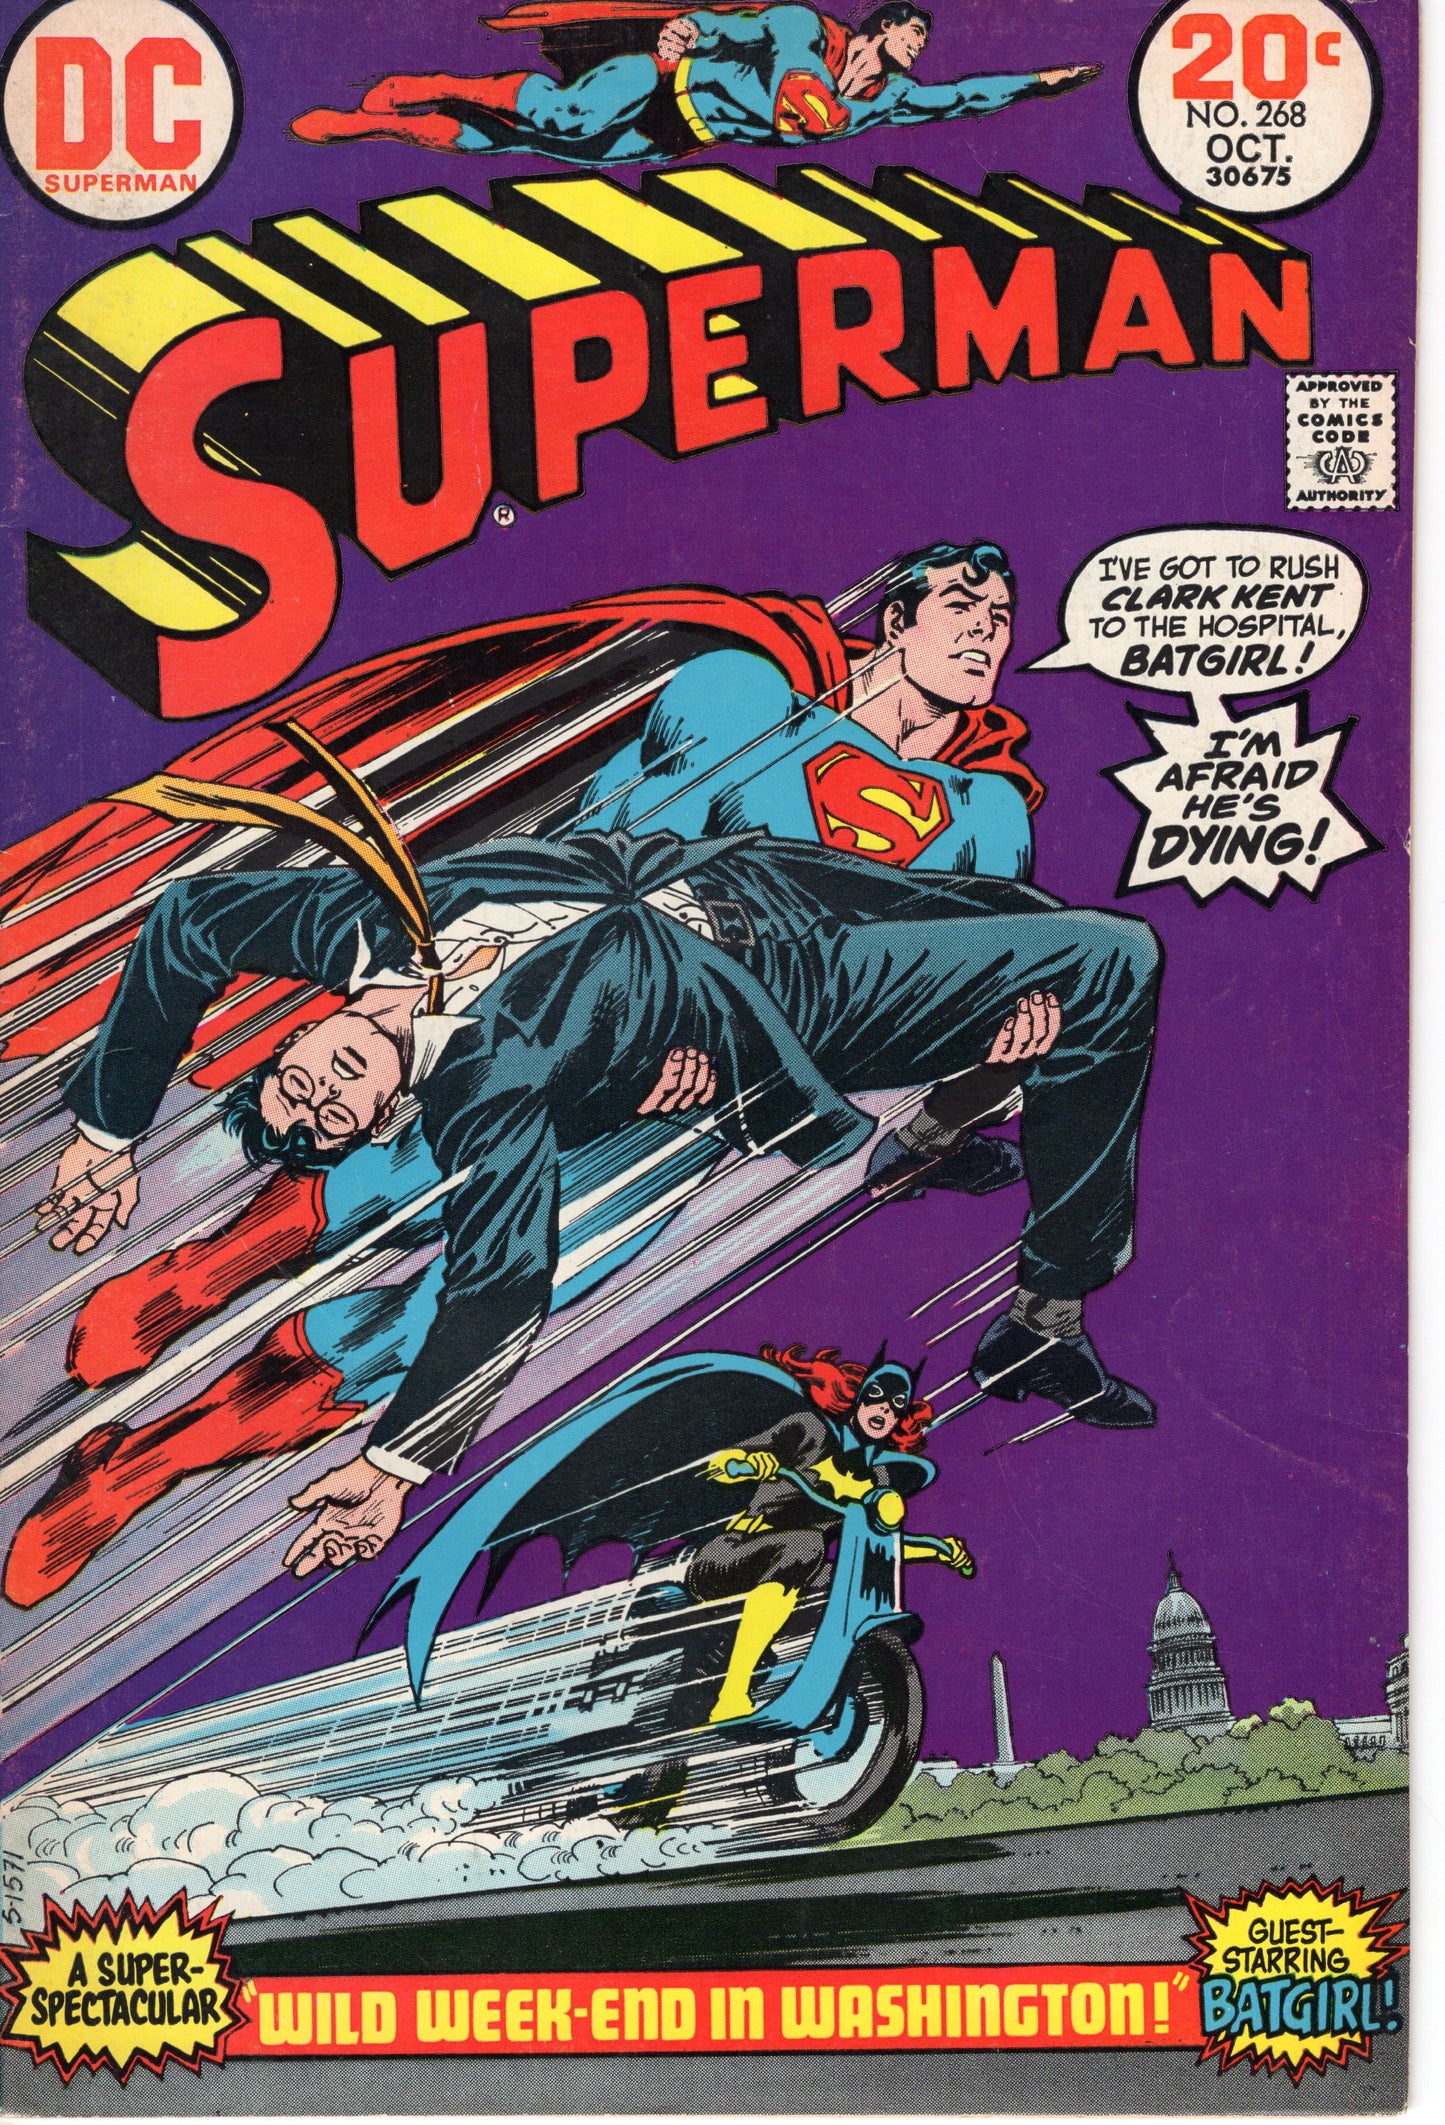 Superman - Issue #268 (Oct., 1973 - DC Comics) FN